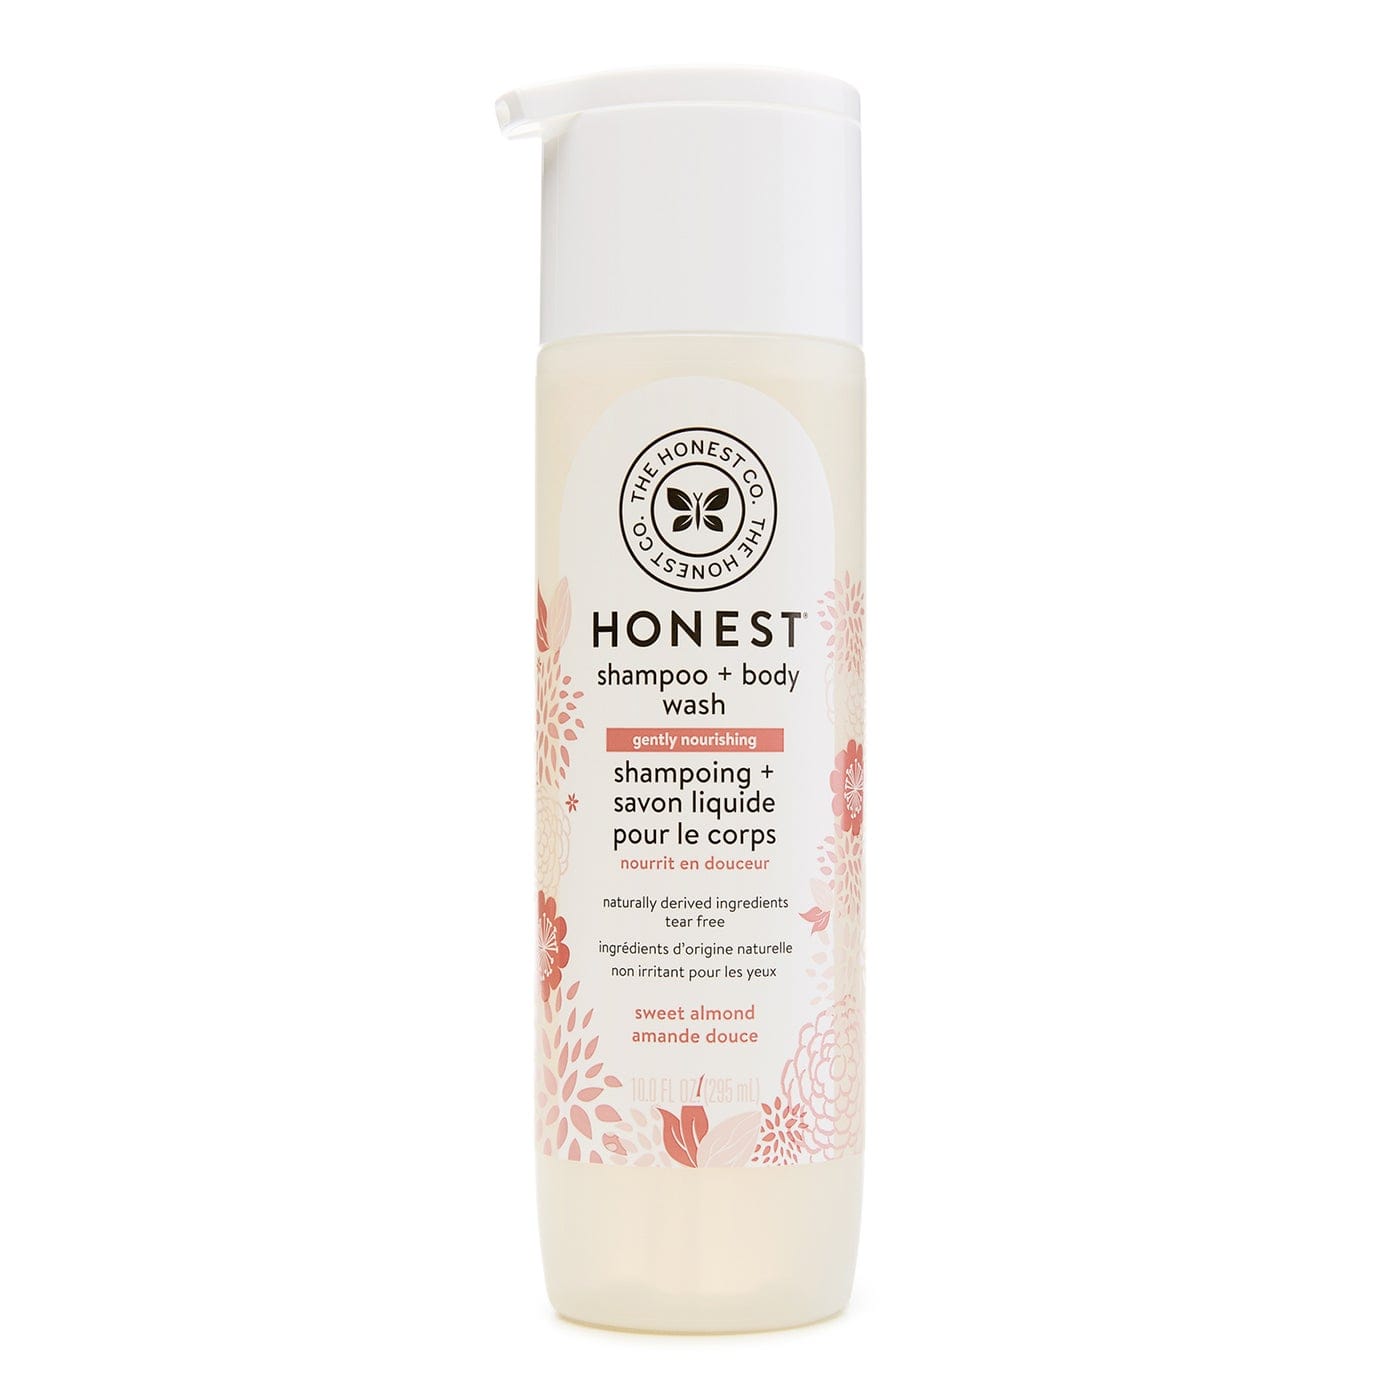 The Honest Company hair care 10 oz/295 ml The Honest Company Honest Shampoo & Body Wash - Sweet Almond